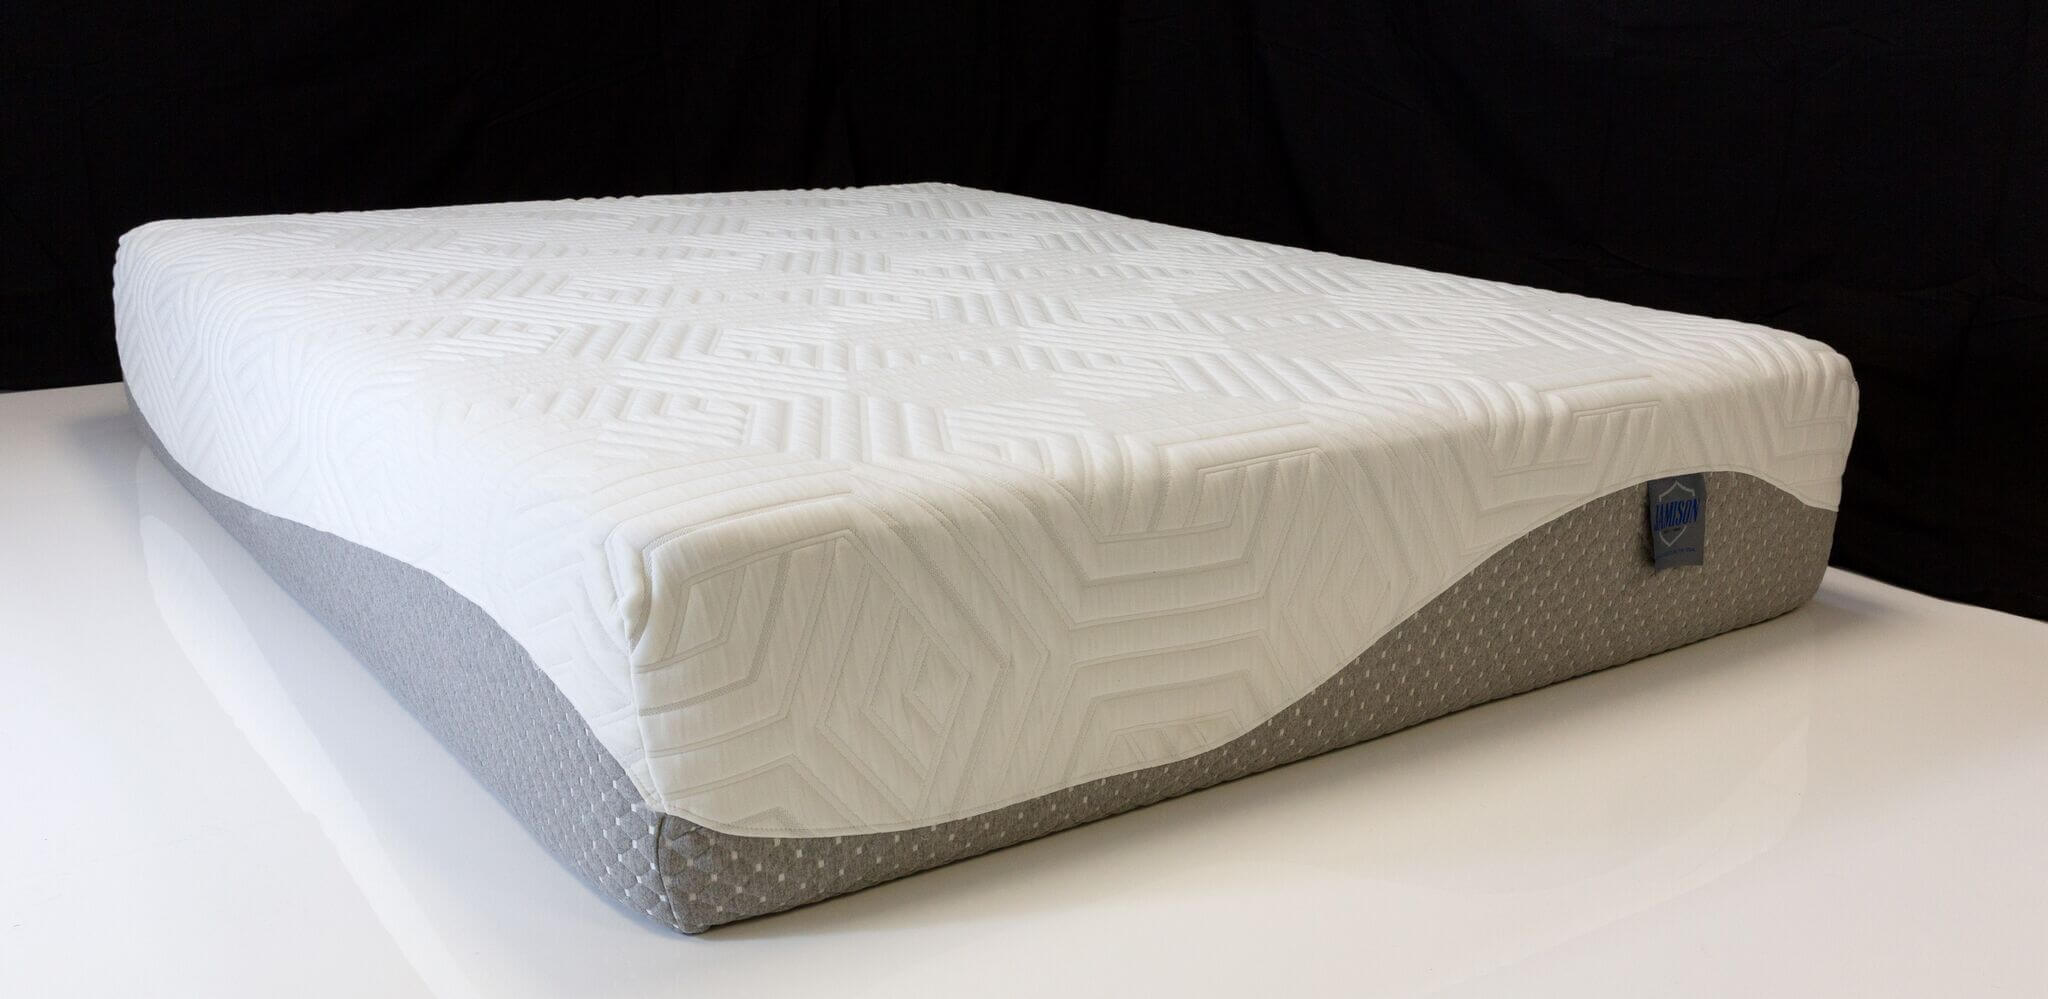 jamison latex mattress prices